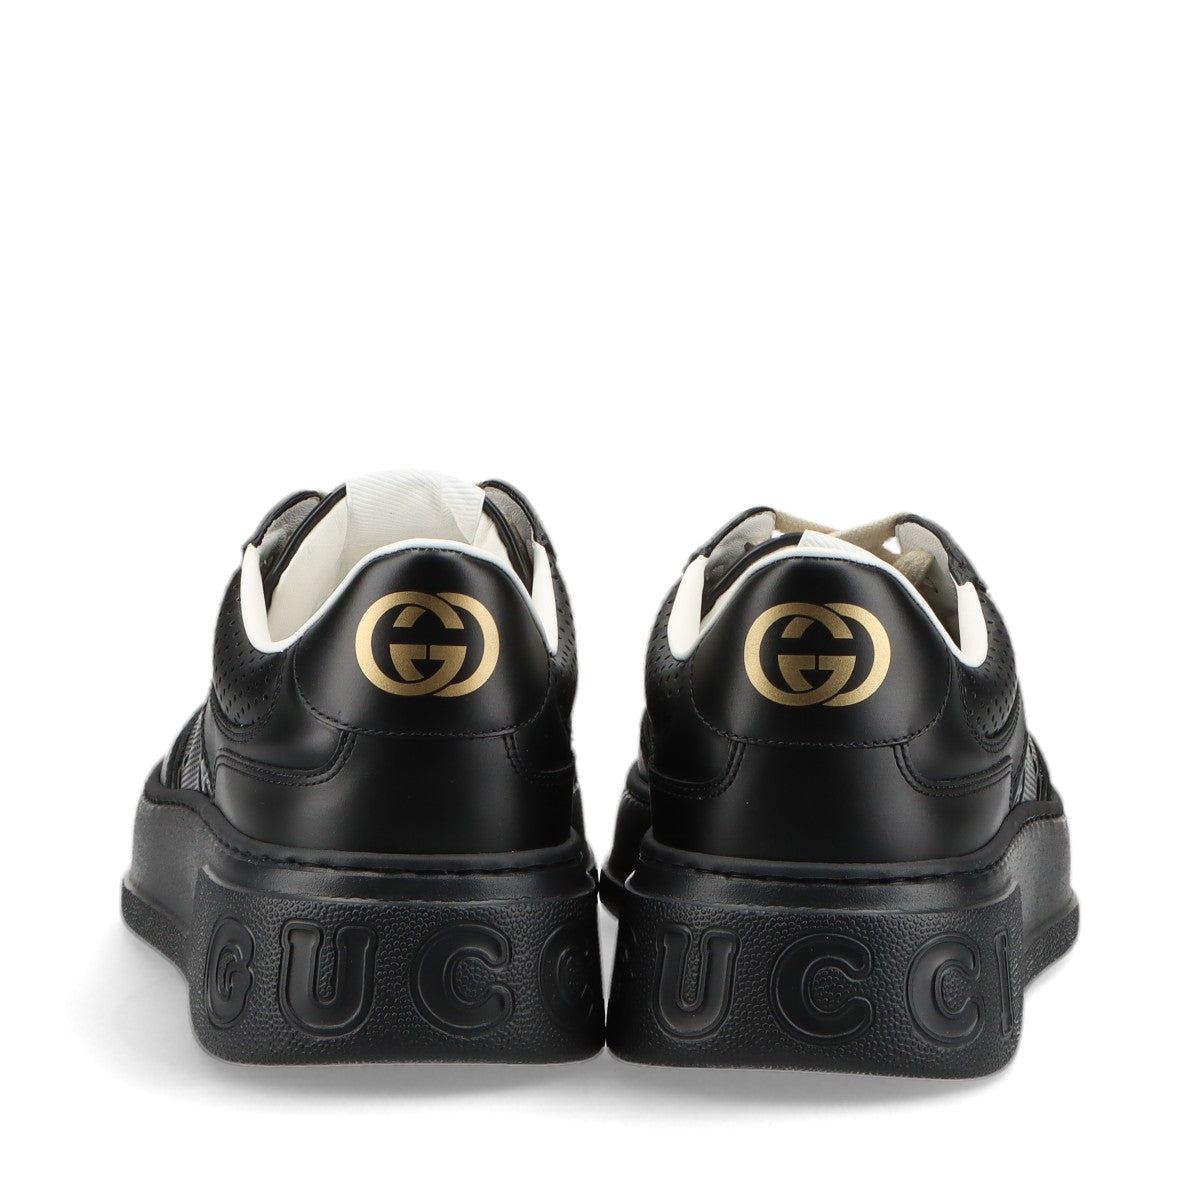 Gucci GG Embos Leather Trainers 11 Men Black 669682 GG Supreme   Box  Bag